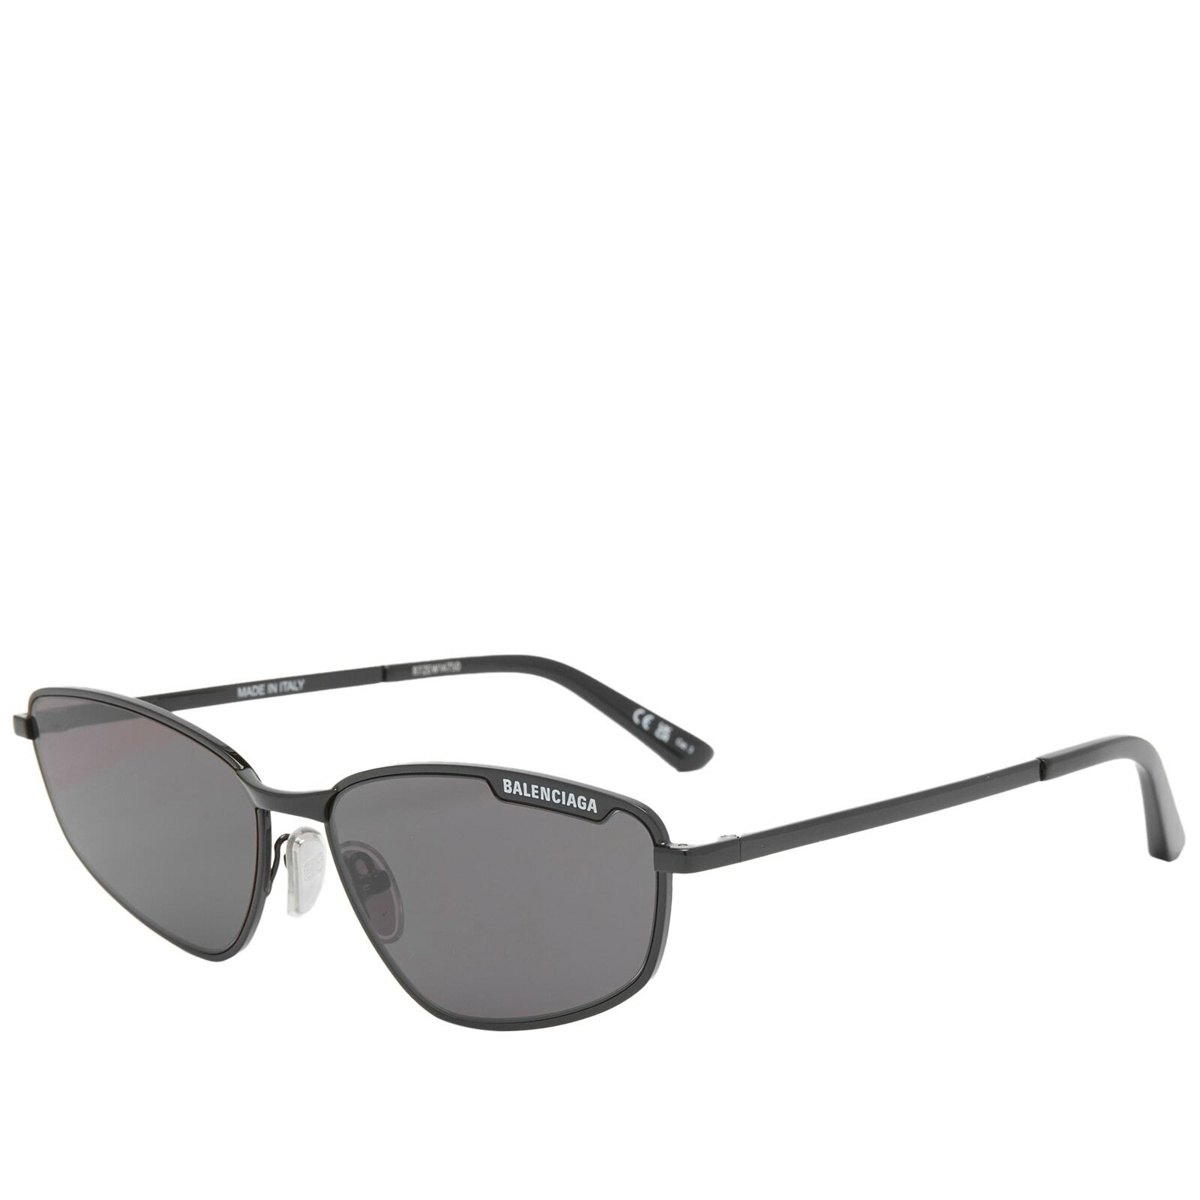 Balenciaga Eyewear BB0277S Sunglasses in Ruthenium/Blue Balenciaga